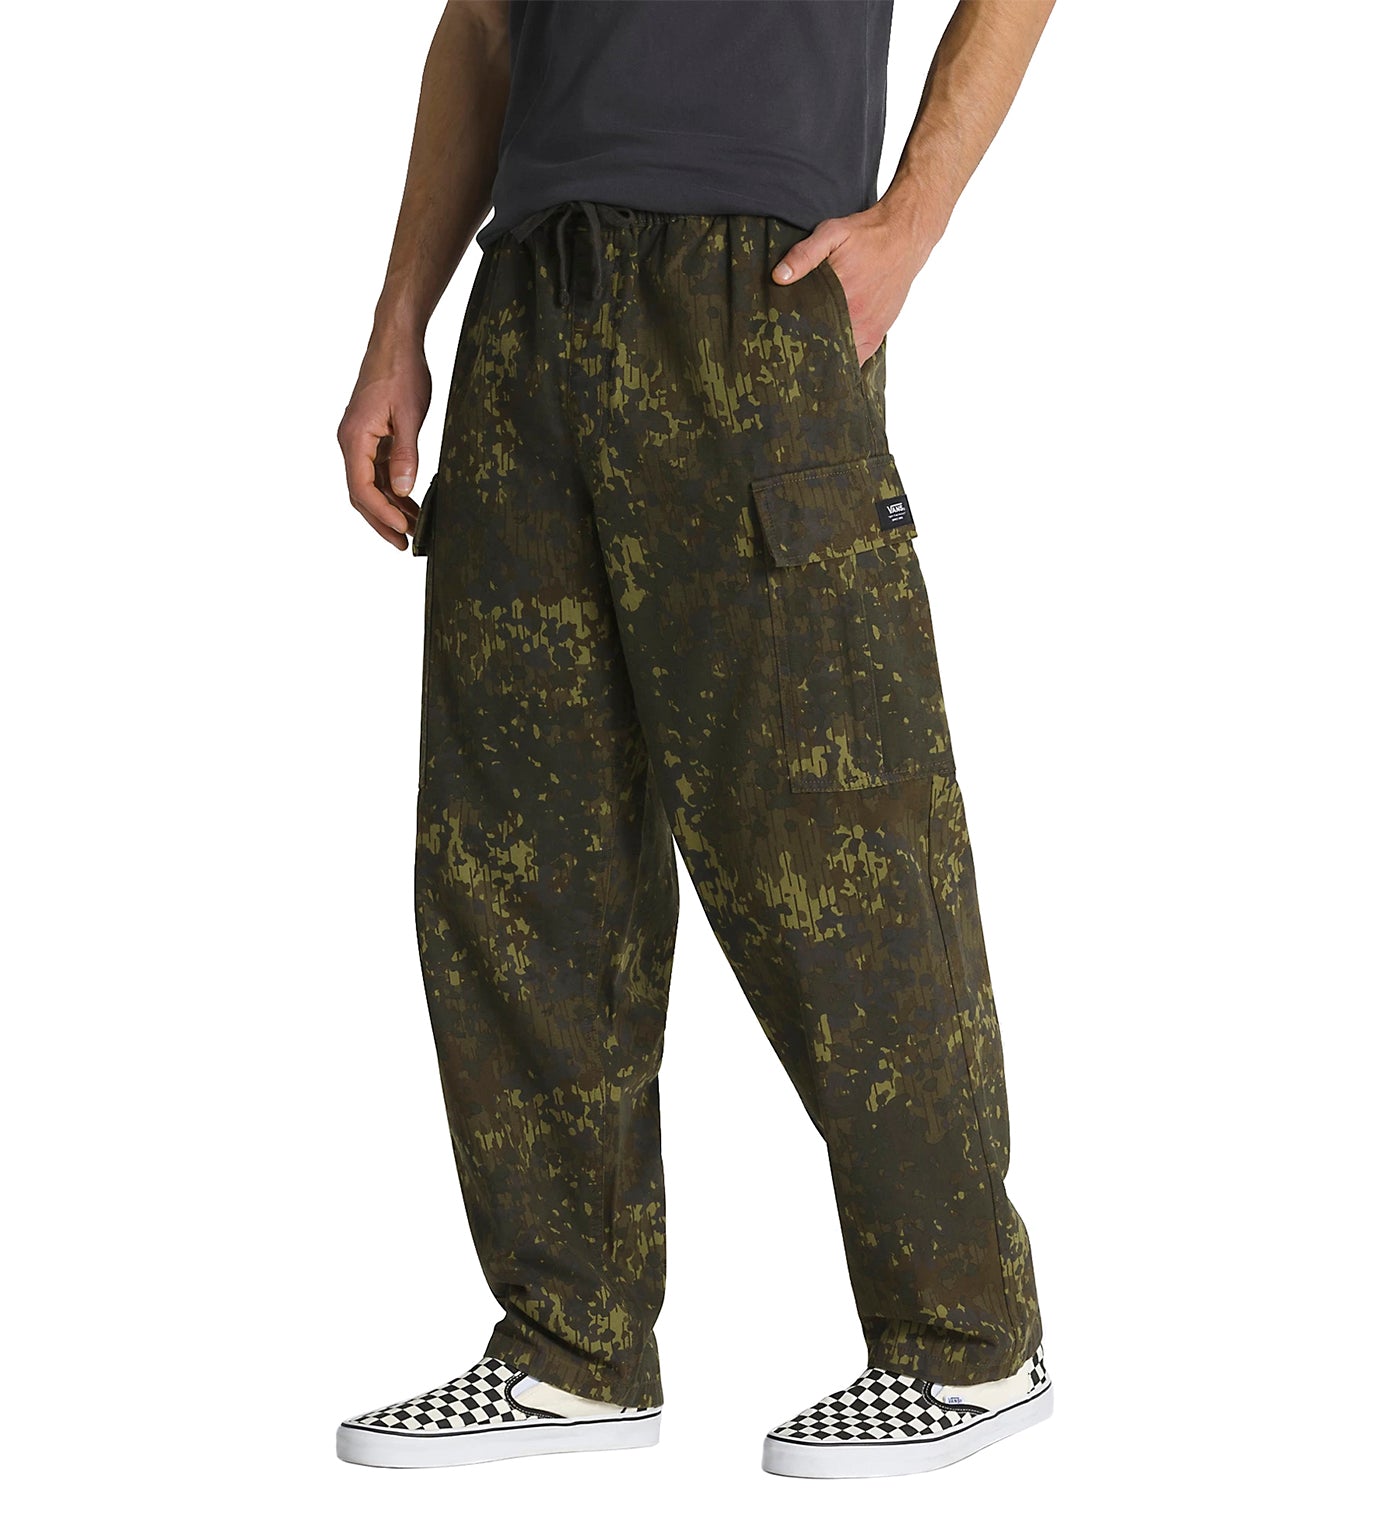 cargo pants with adjustable waist band｜TikTok Search